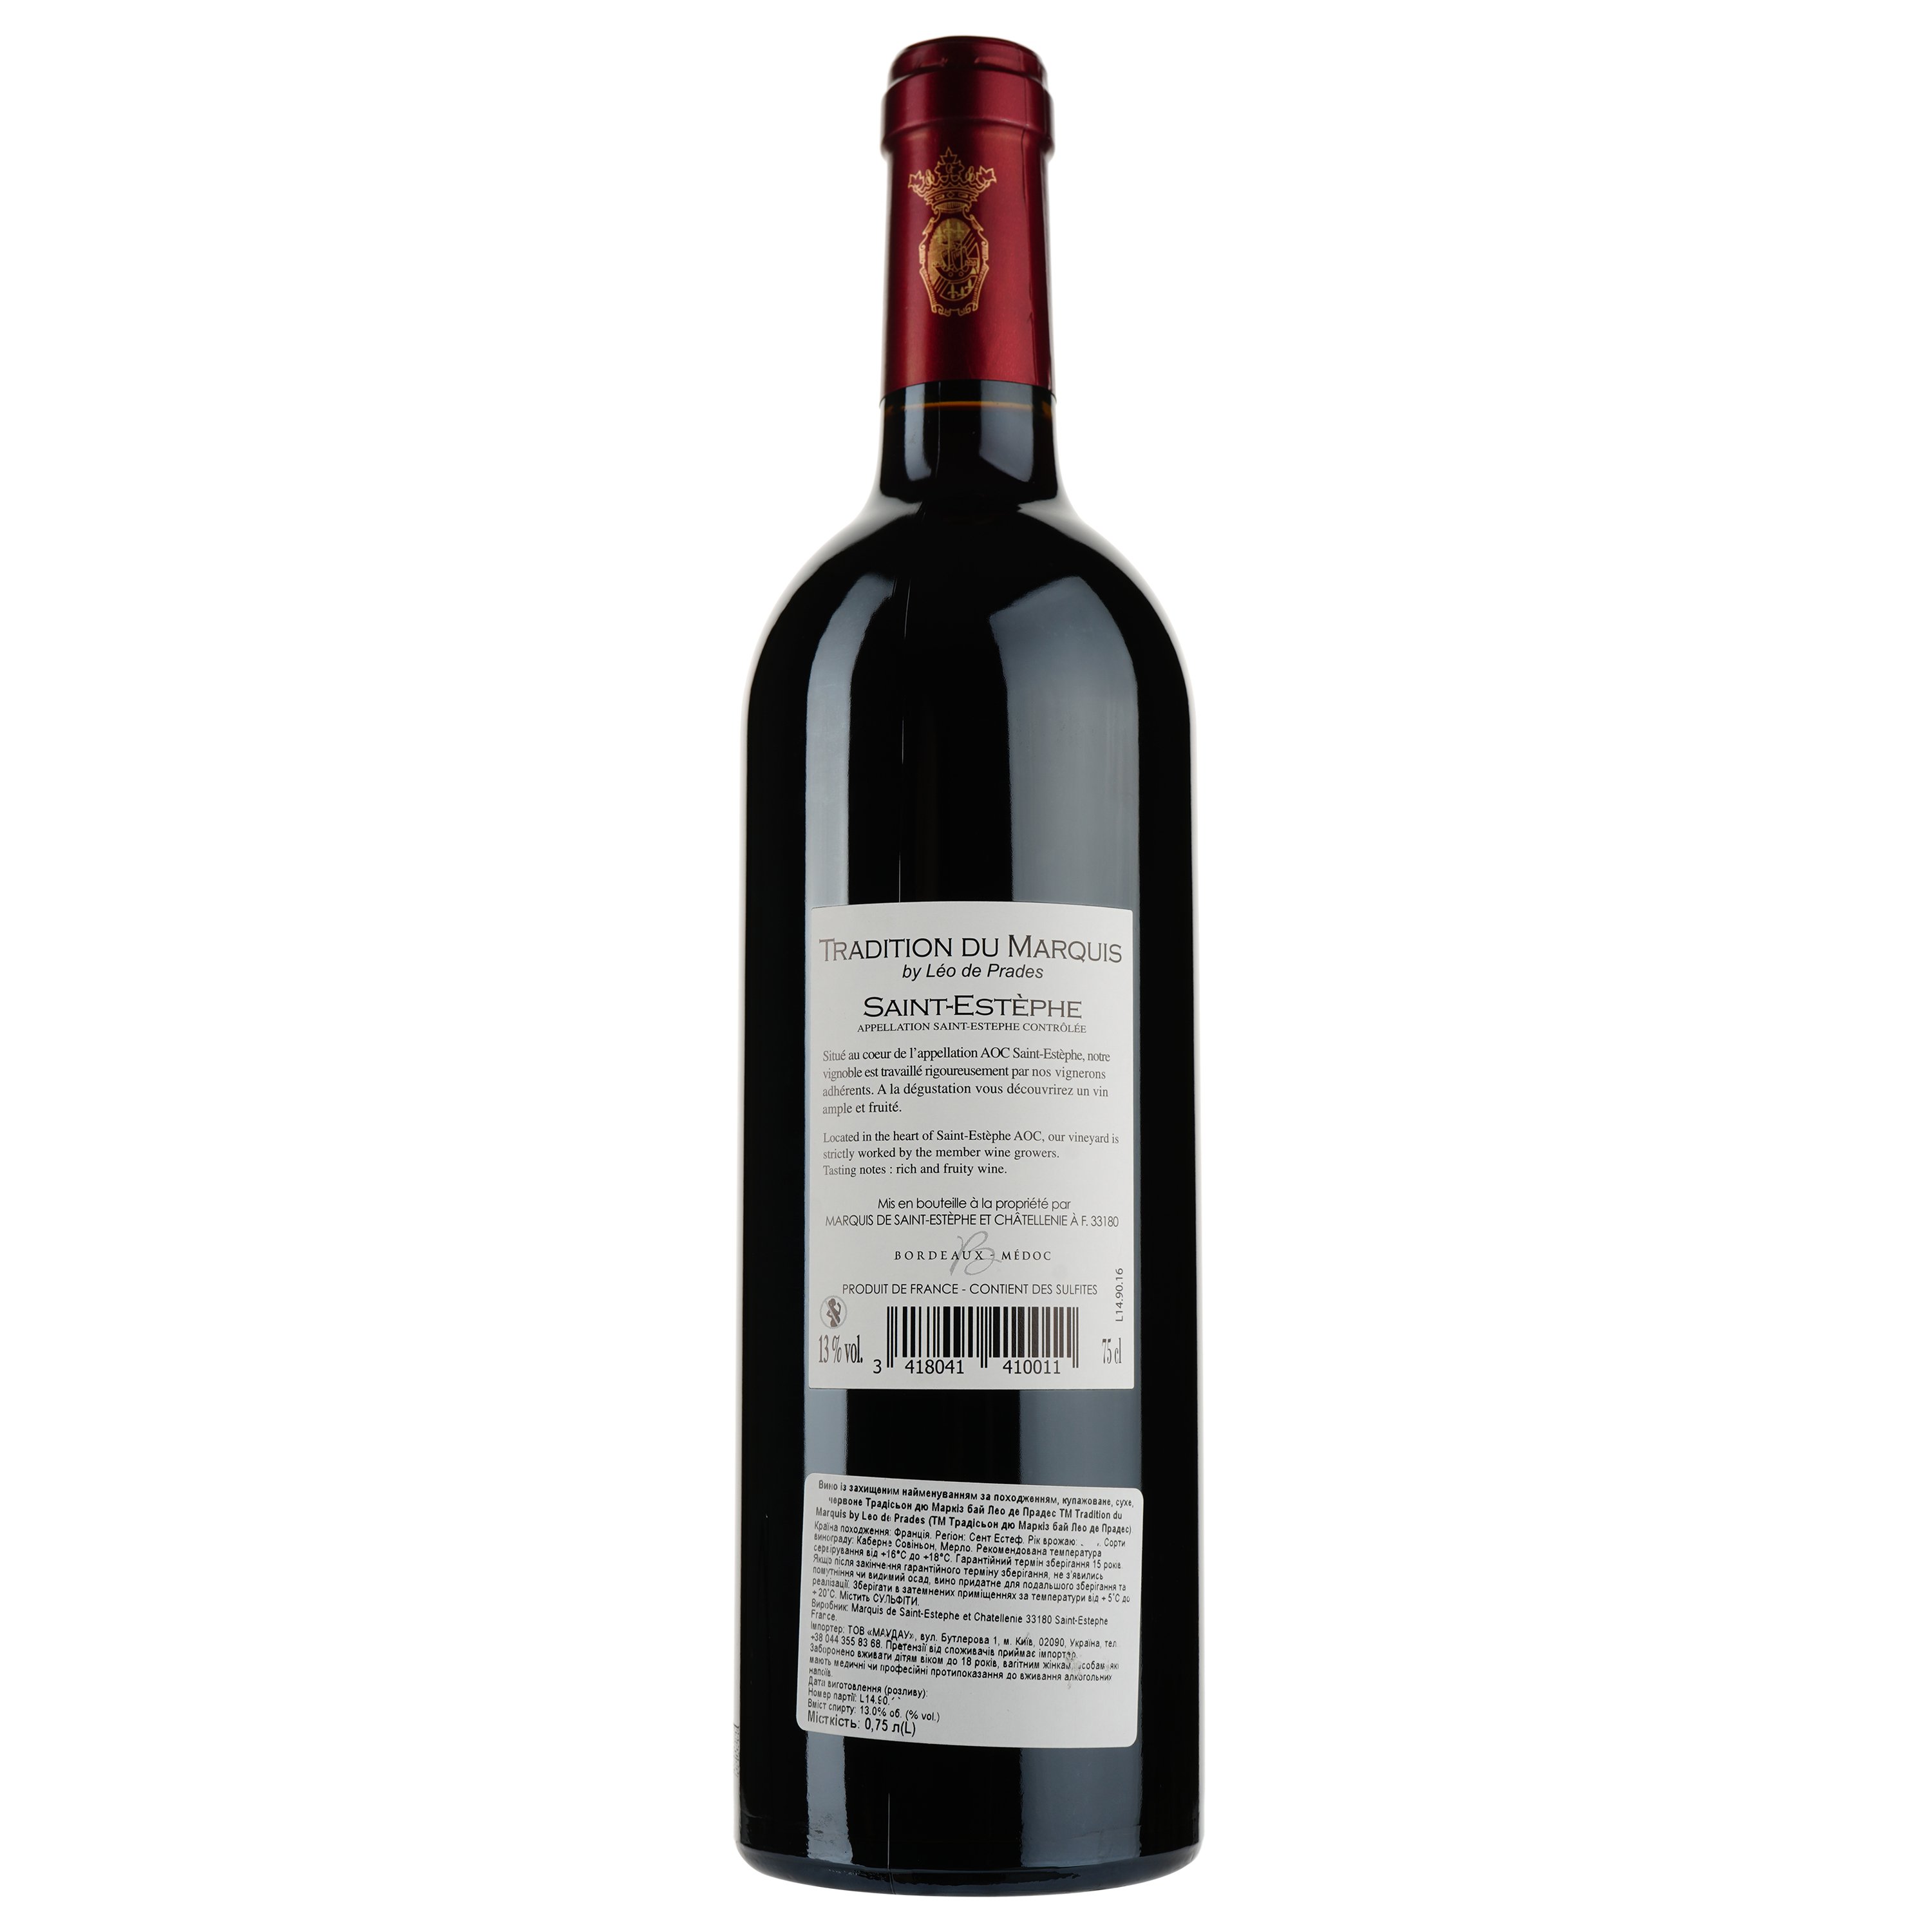 Вино Tradition du Marquis by Leo de Prades AOP Saint-Estephe 2014, червоне, сухе, 0,75 л - фото 2